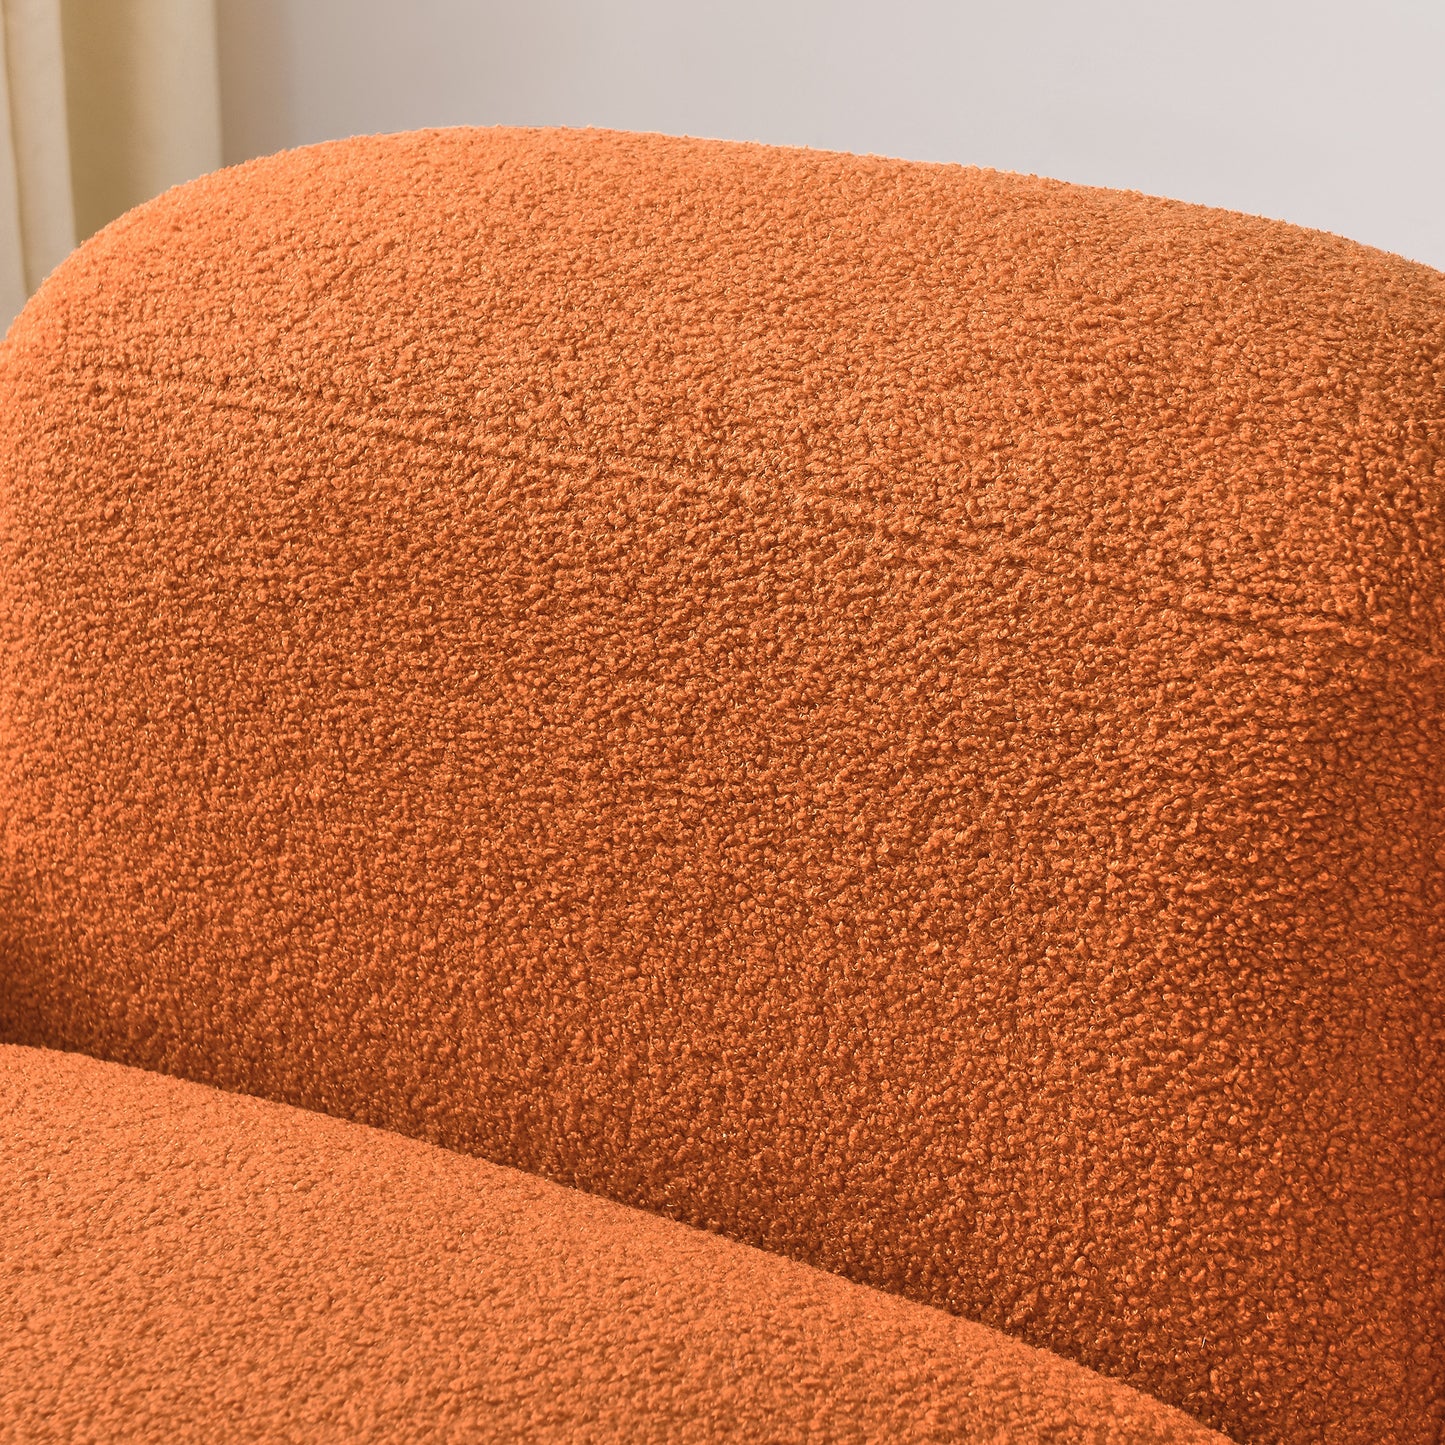 L-Shape Modular Sectional Sofa,DIY Combination,Teddy Fabric,Orange.